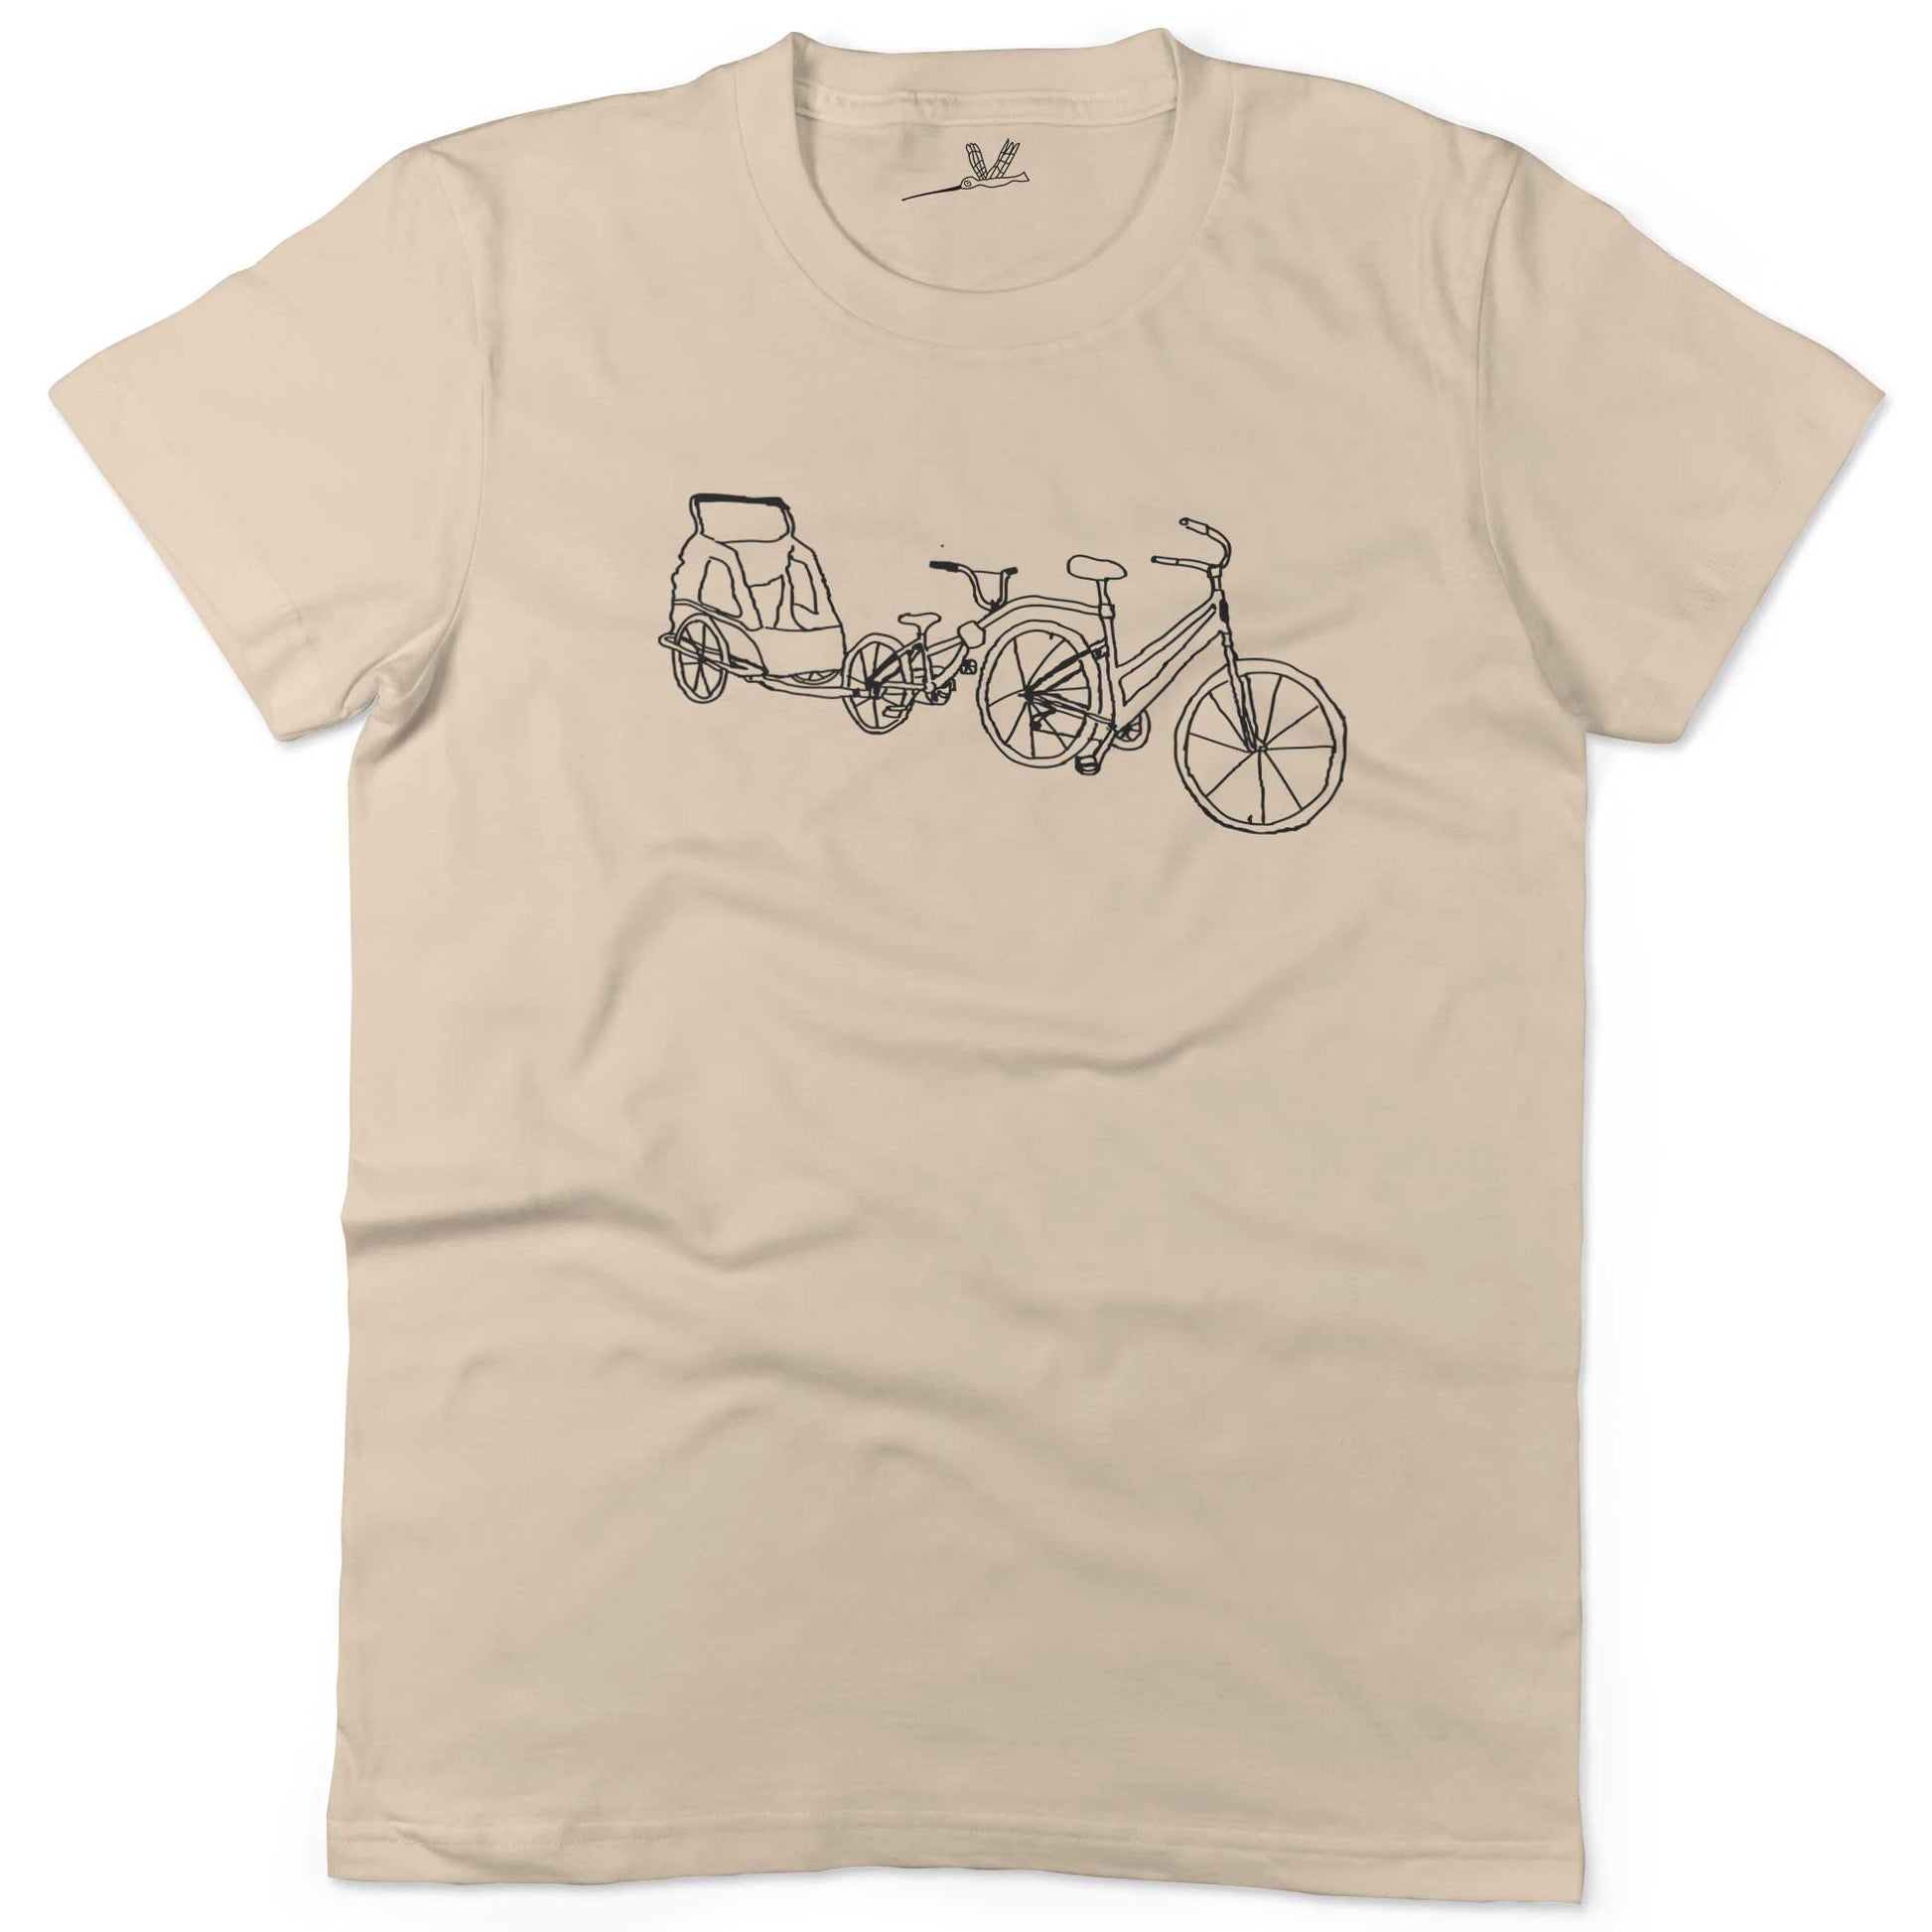 Family Bike Caravan Unisex Or Women's Cotton T-shirt-Organic Natural-Woman